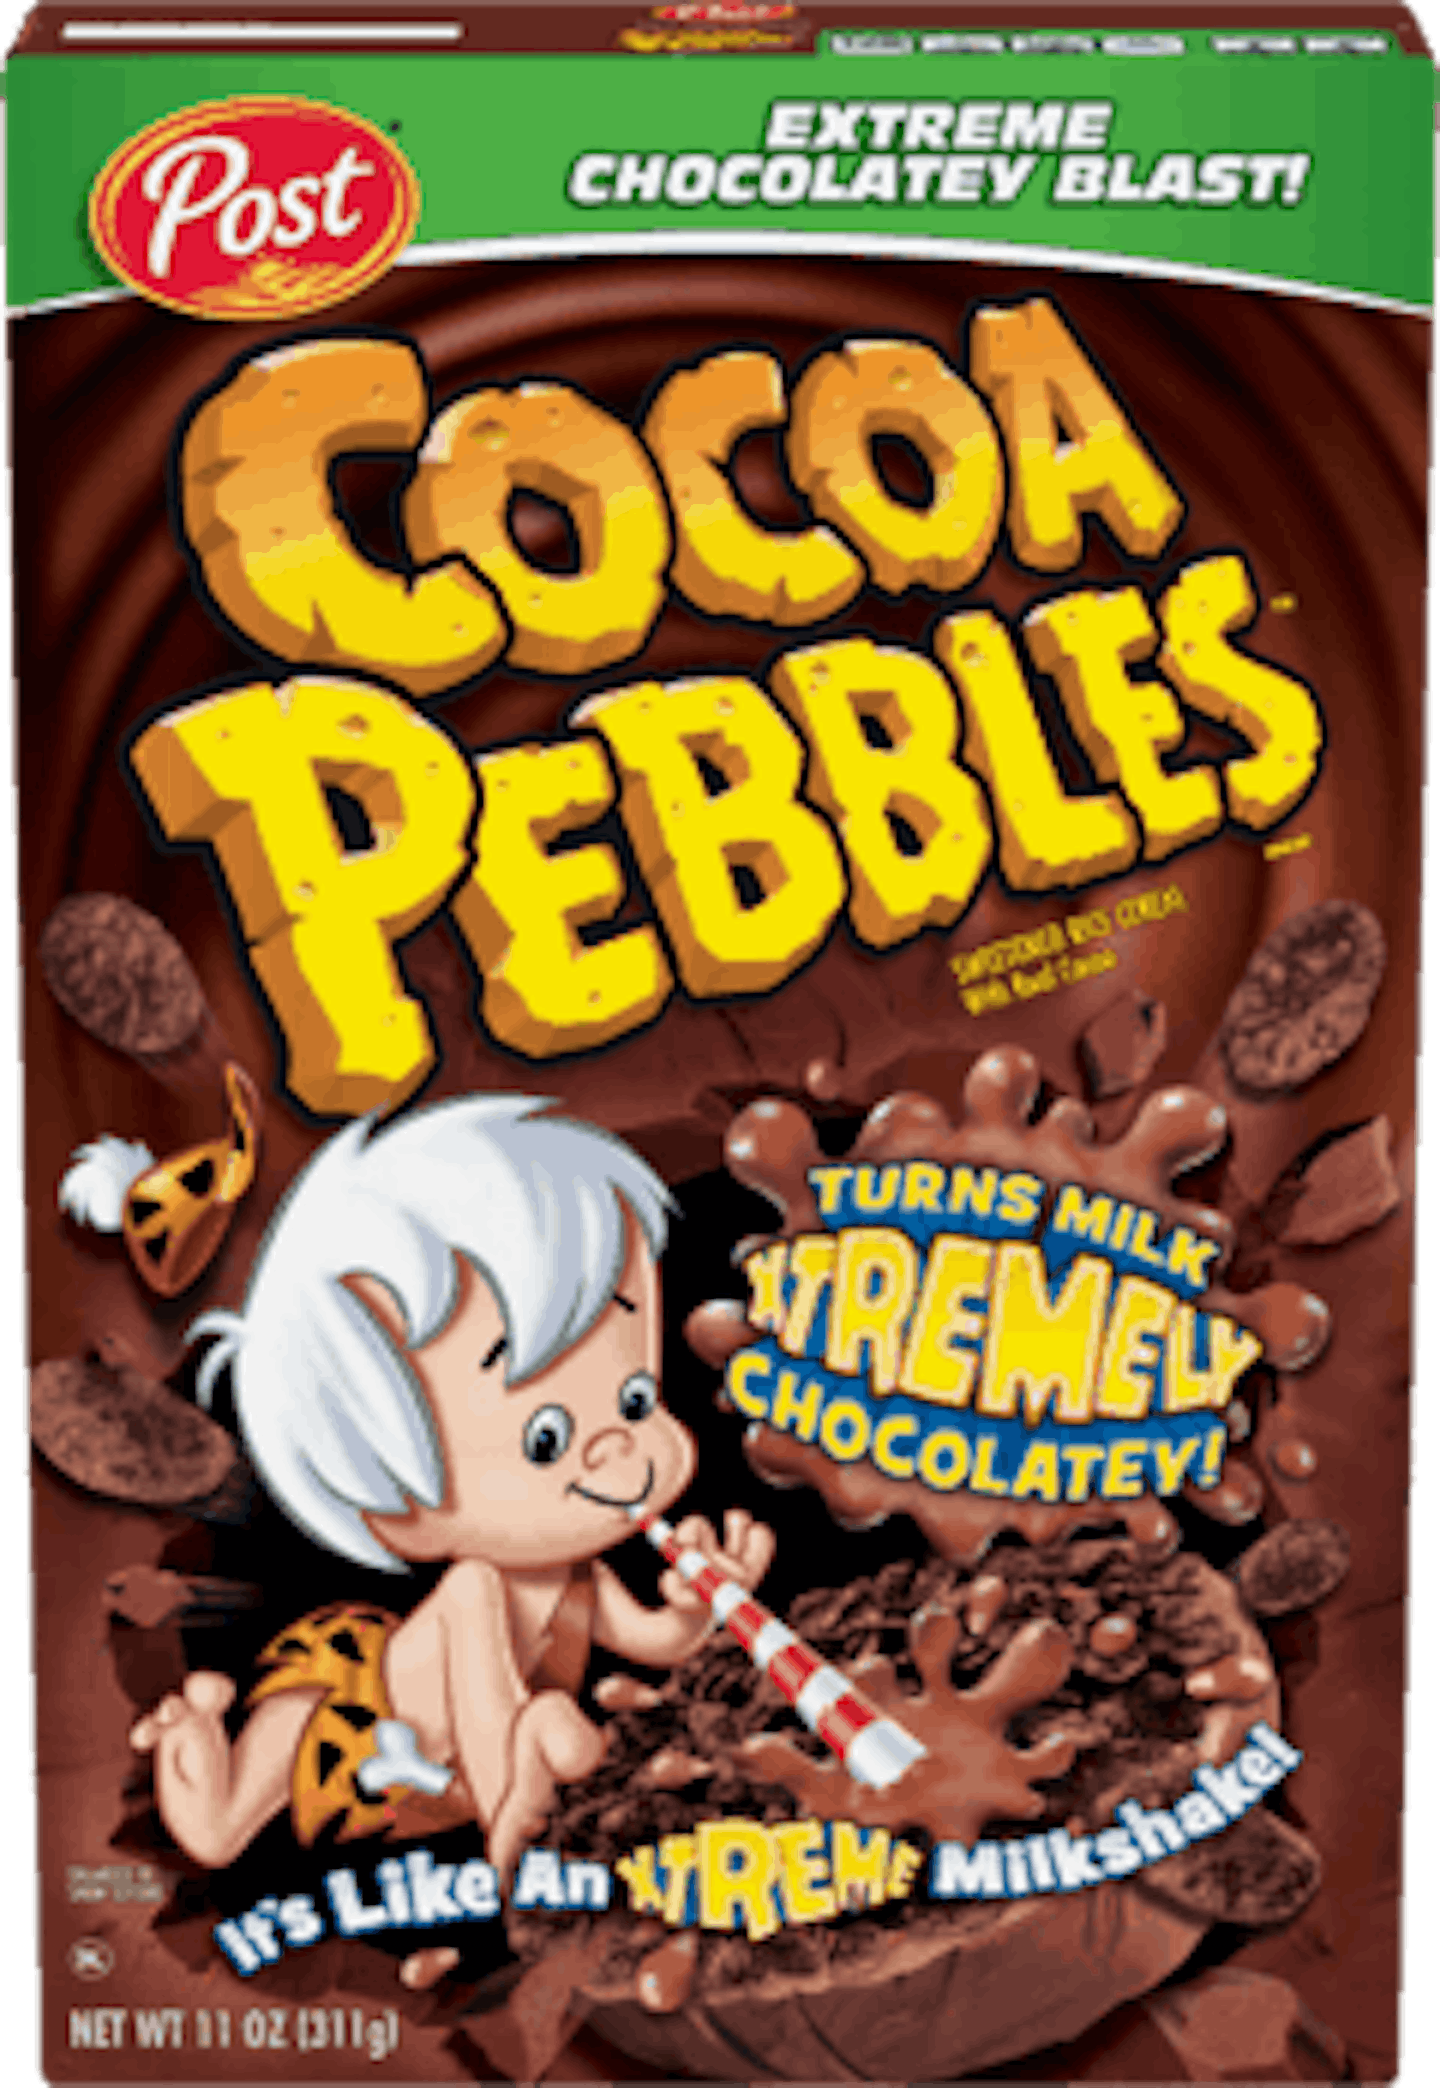 Discontinued cereals Cocoa Pebbles